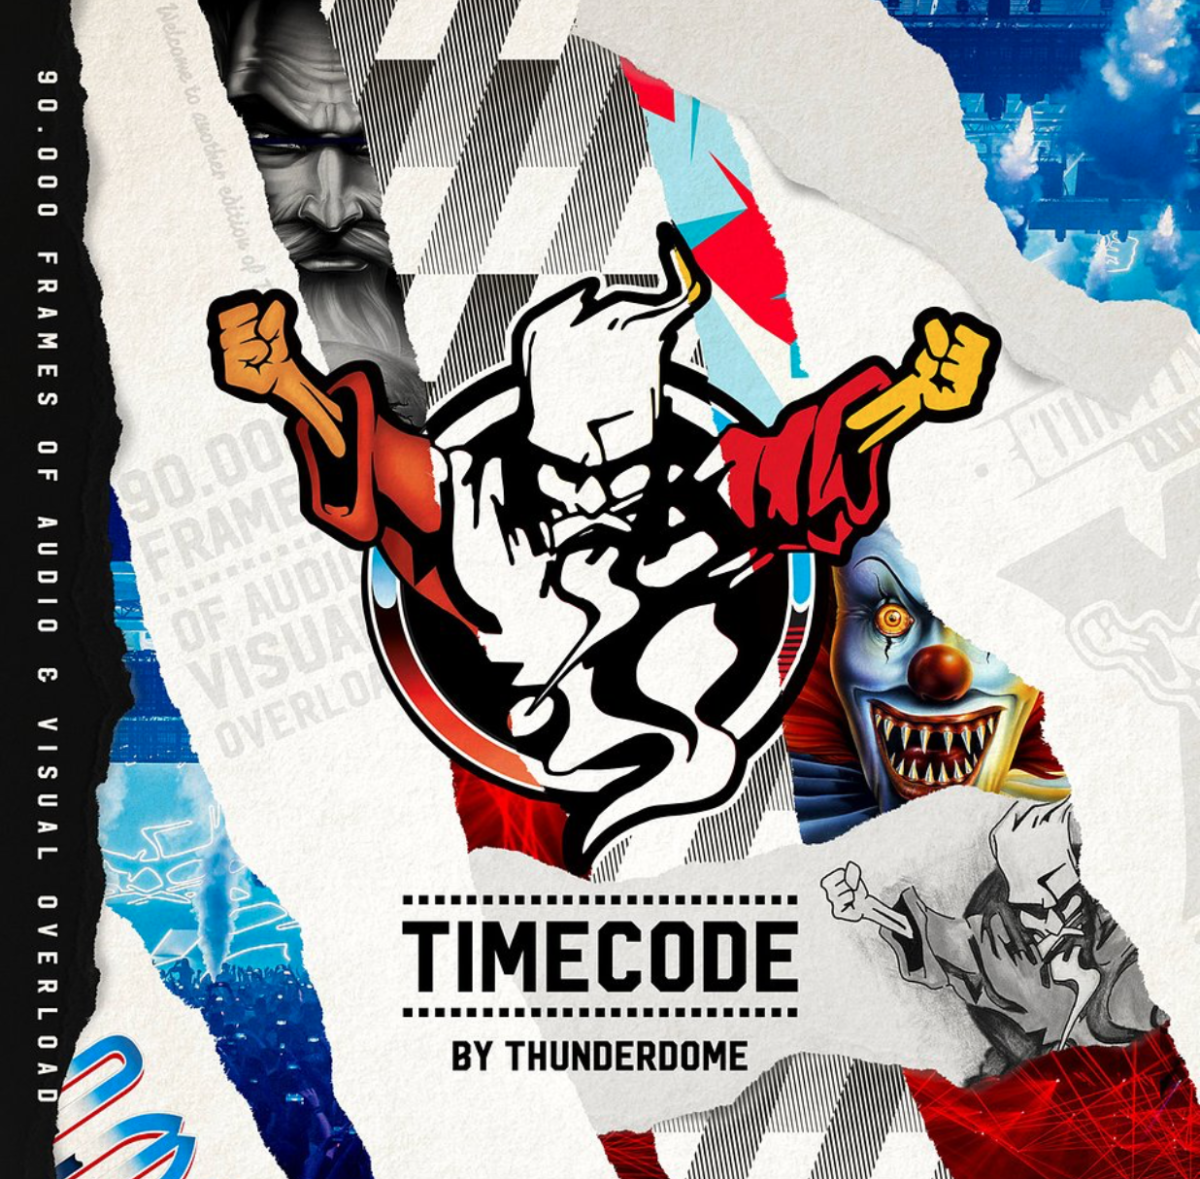 ID&T lanceert audiovisuele experience Timecode by Thunderdome